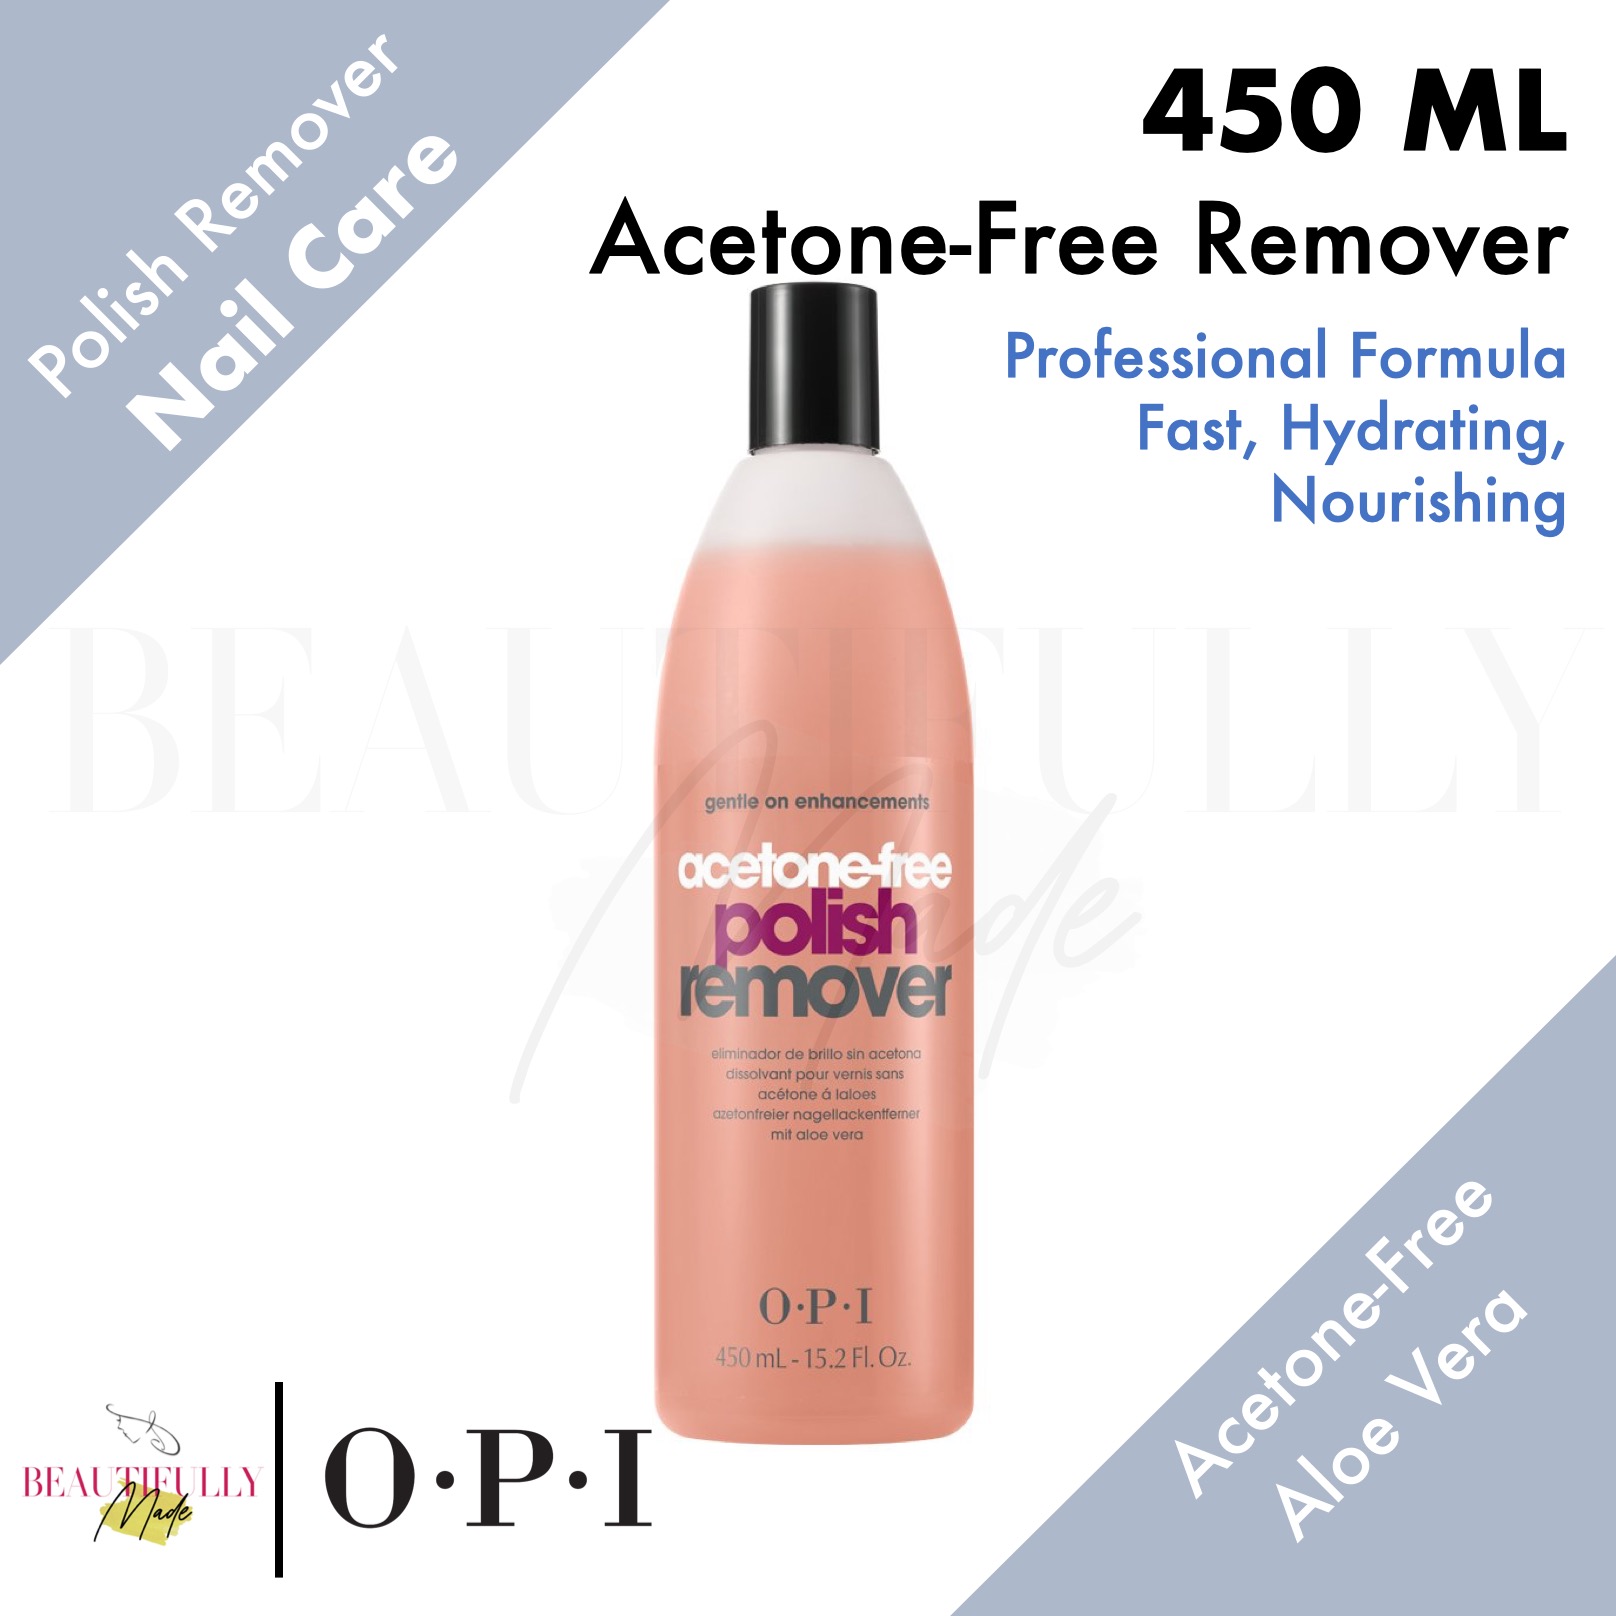 OPI Acetone-Free Polish Remover 450ml - Without Acetone • Removes Nail  Polish • Moisturizing Aloe Vera Formula • For Natural or Artificial Nails |  Lazada Singapore